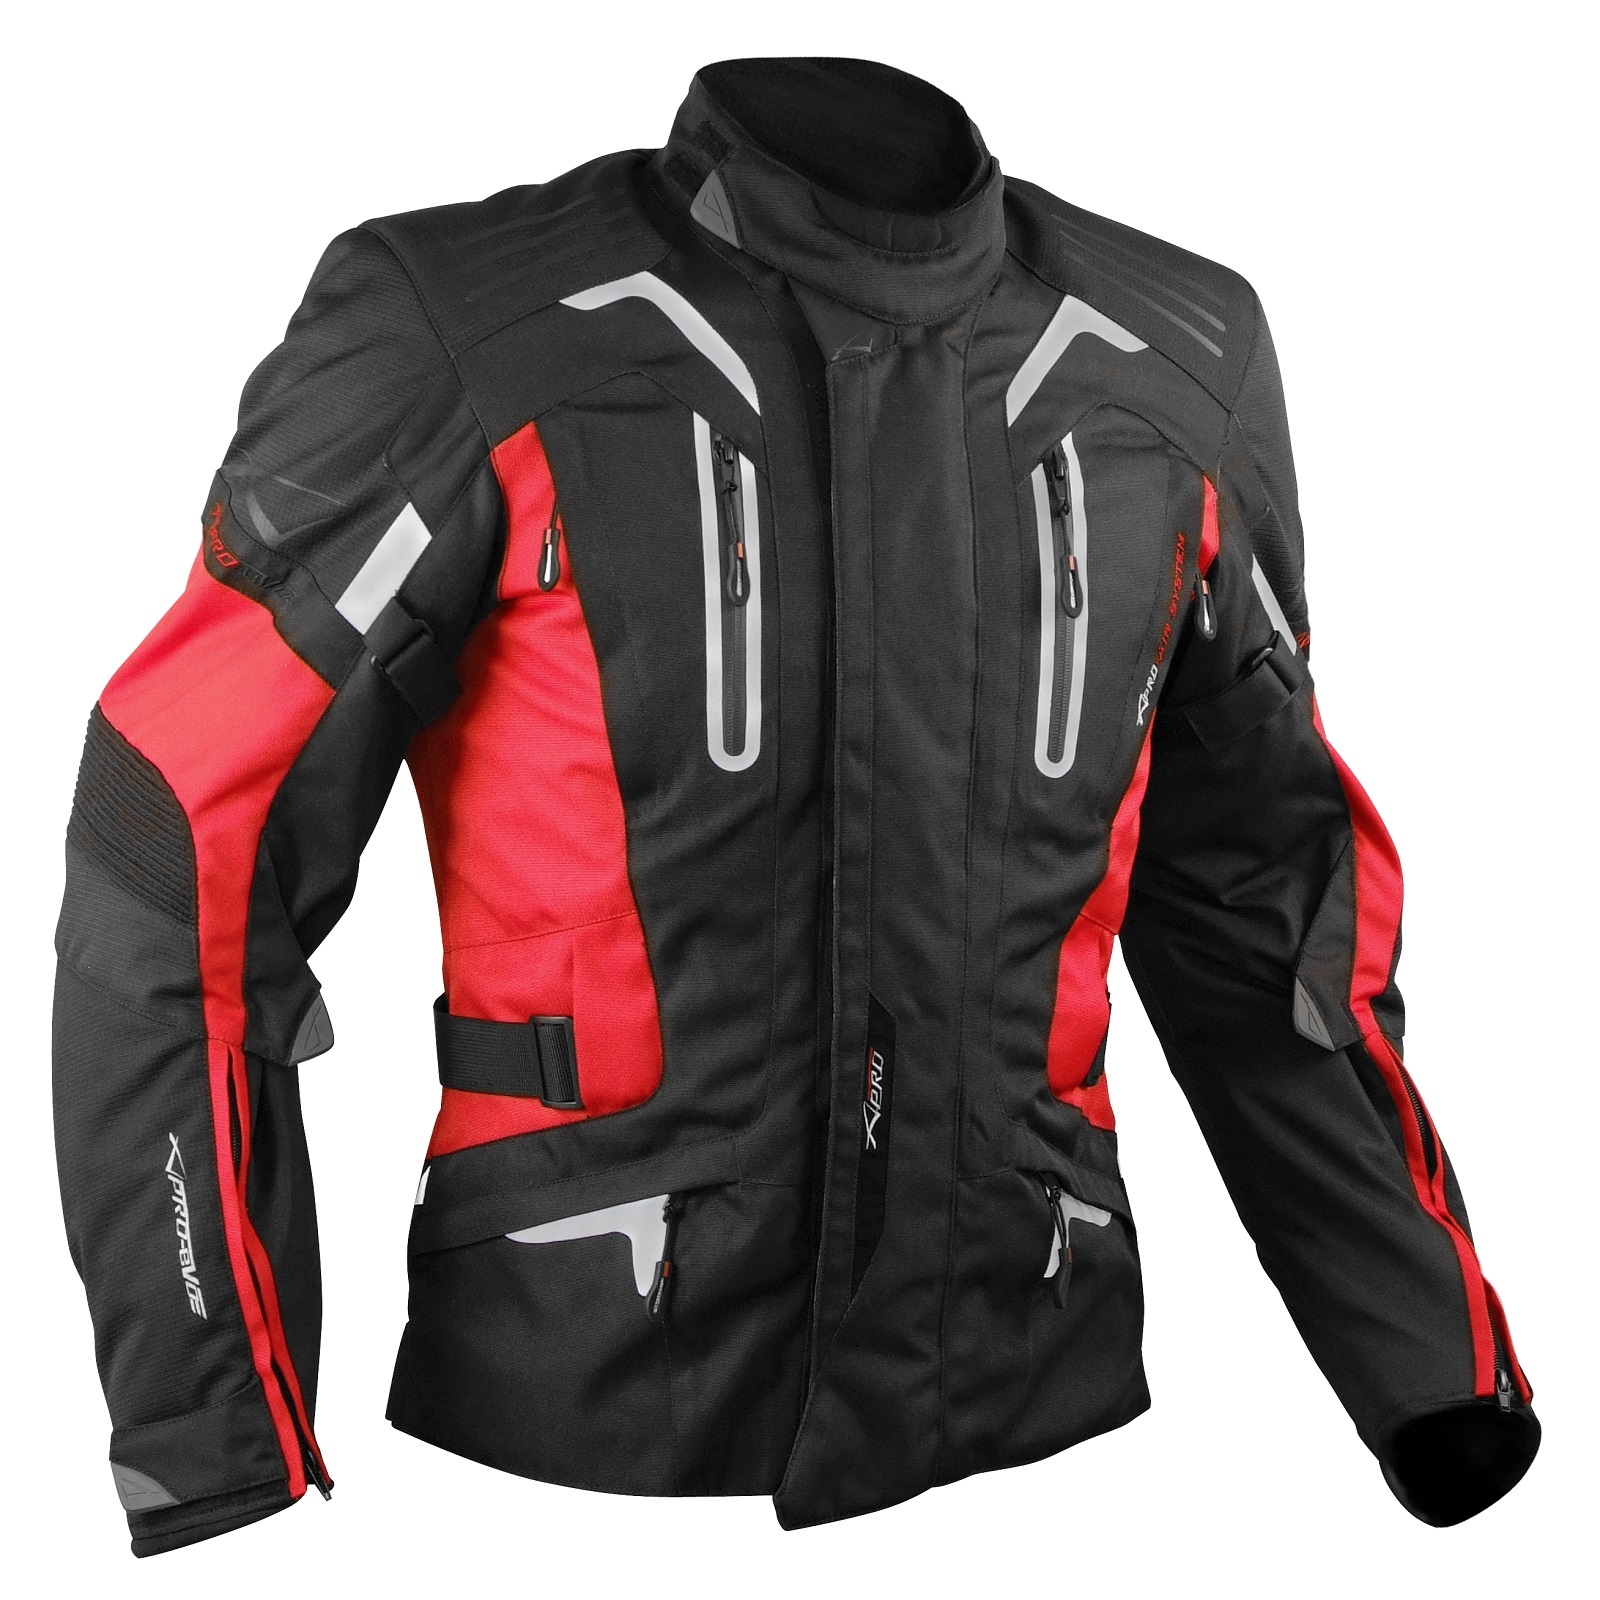 Asia Elocuente cigarrillo 3 Capa térmica impermeable chaqueta Moto protectores CE extraíbles Rojo XXL  TESLA-RED-2X | Compra online en eBay